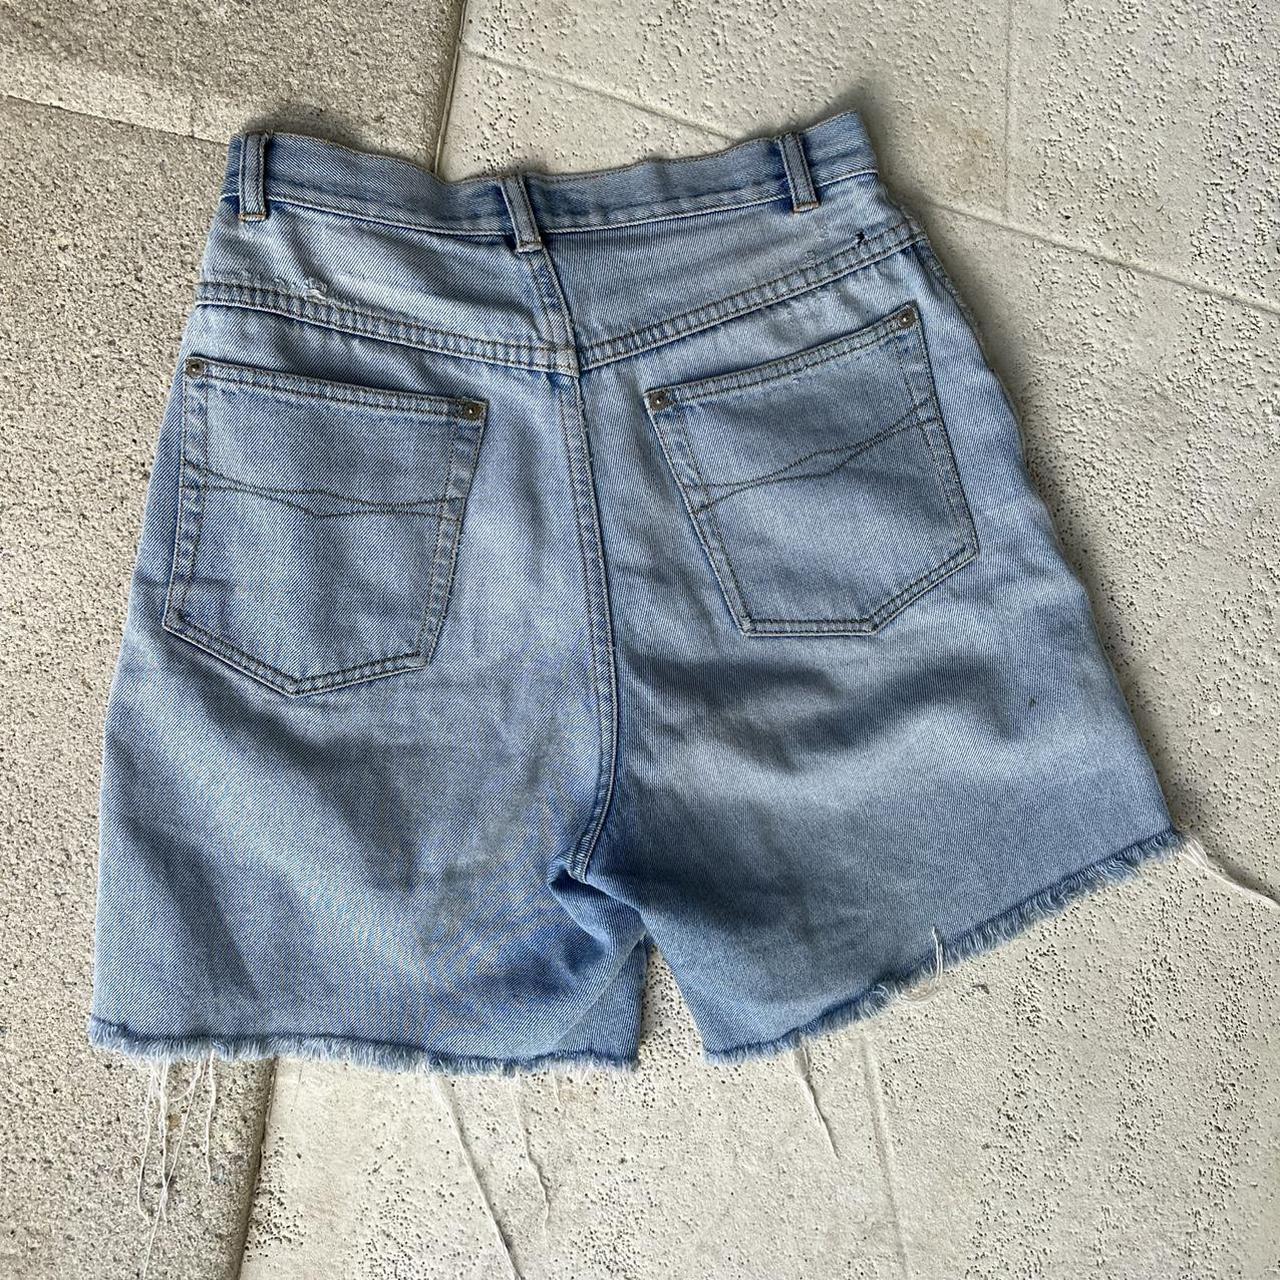 Product Image 2 - Long cut-off denim shorts. High